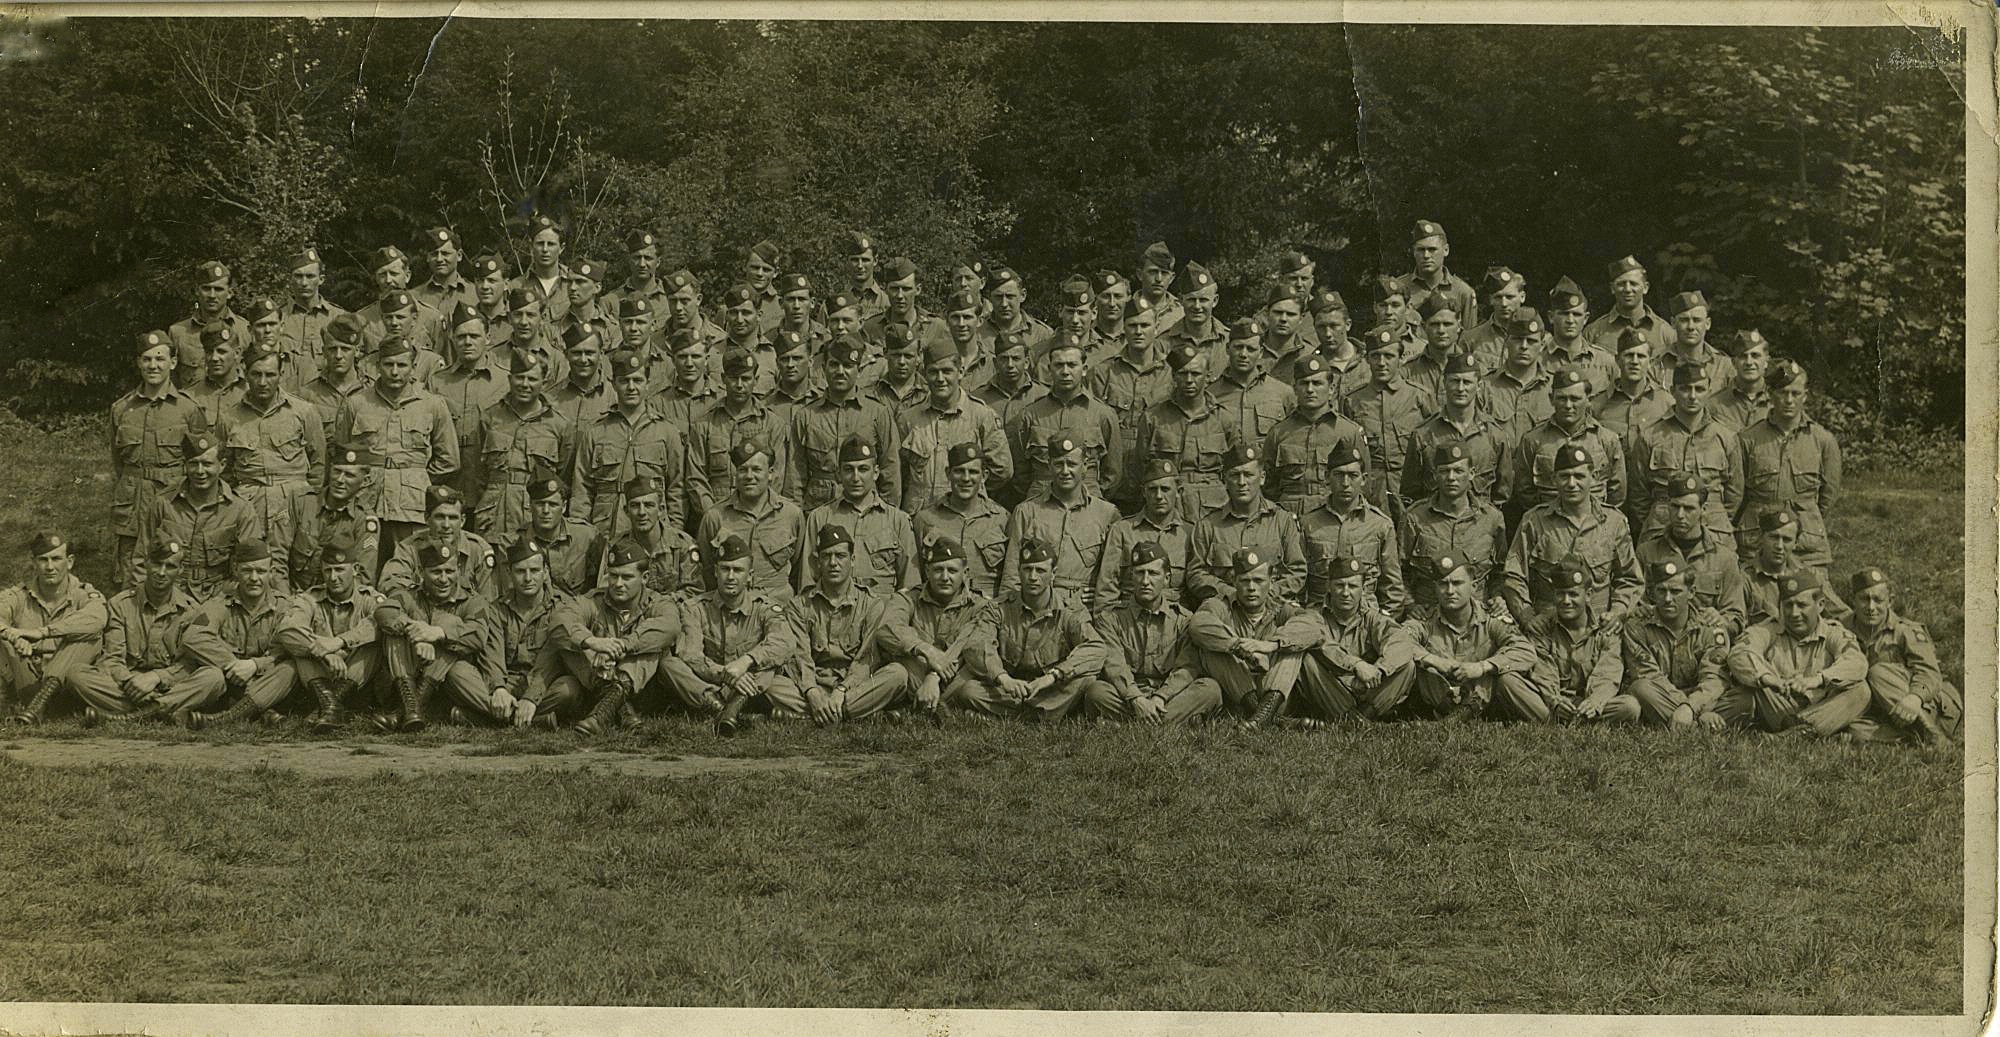 2nd Battalion's Headquarters Company England, 1944.